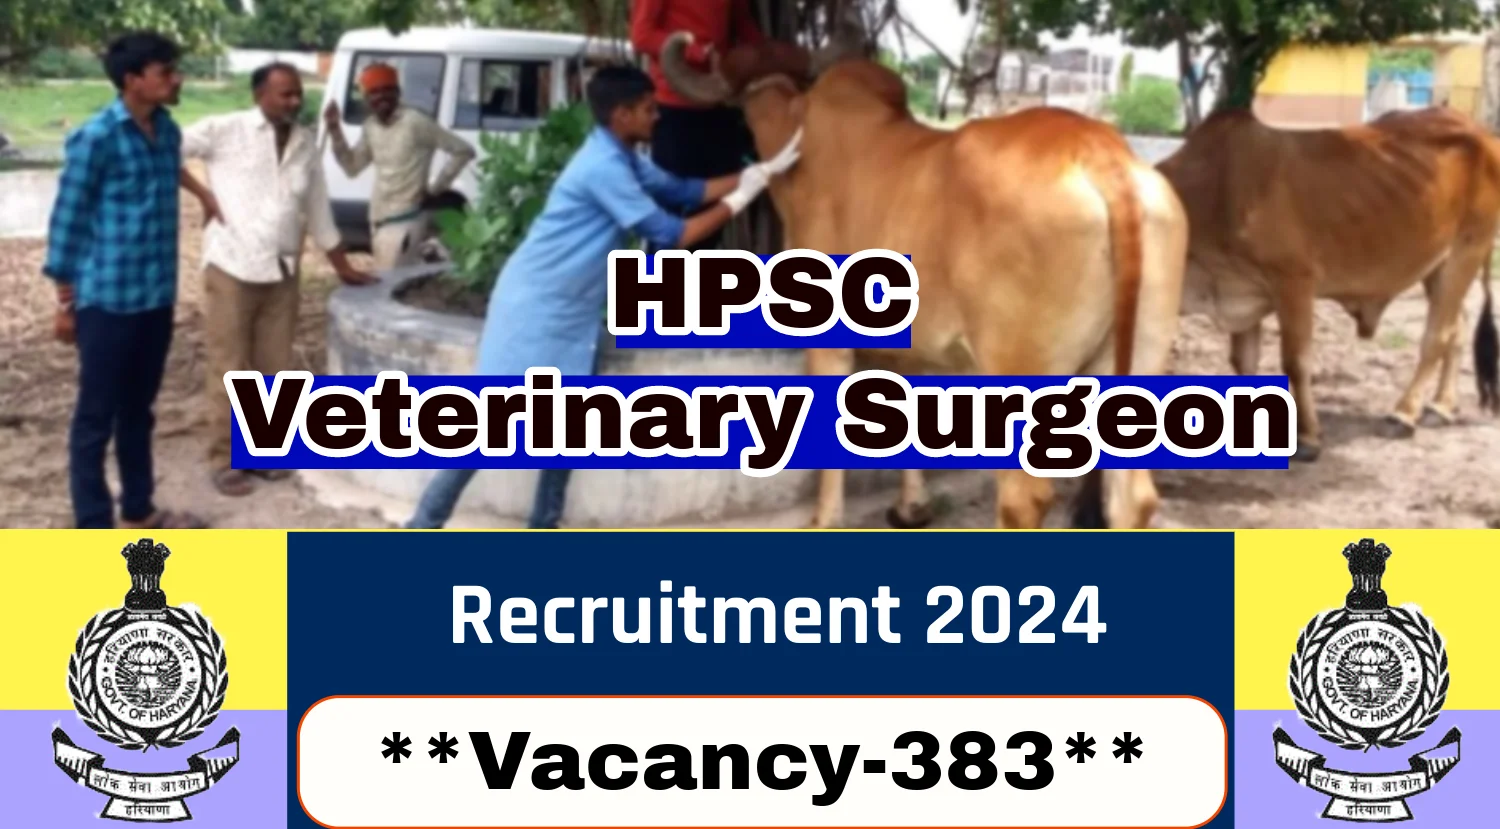 HPSC Veterinary Surgeon Recruitment 2024 for 383 Vacancies